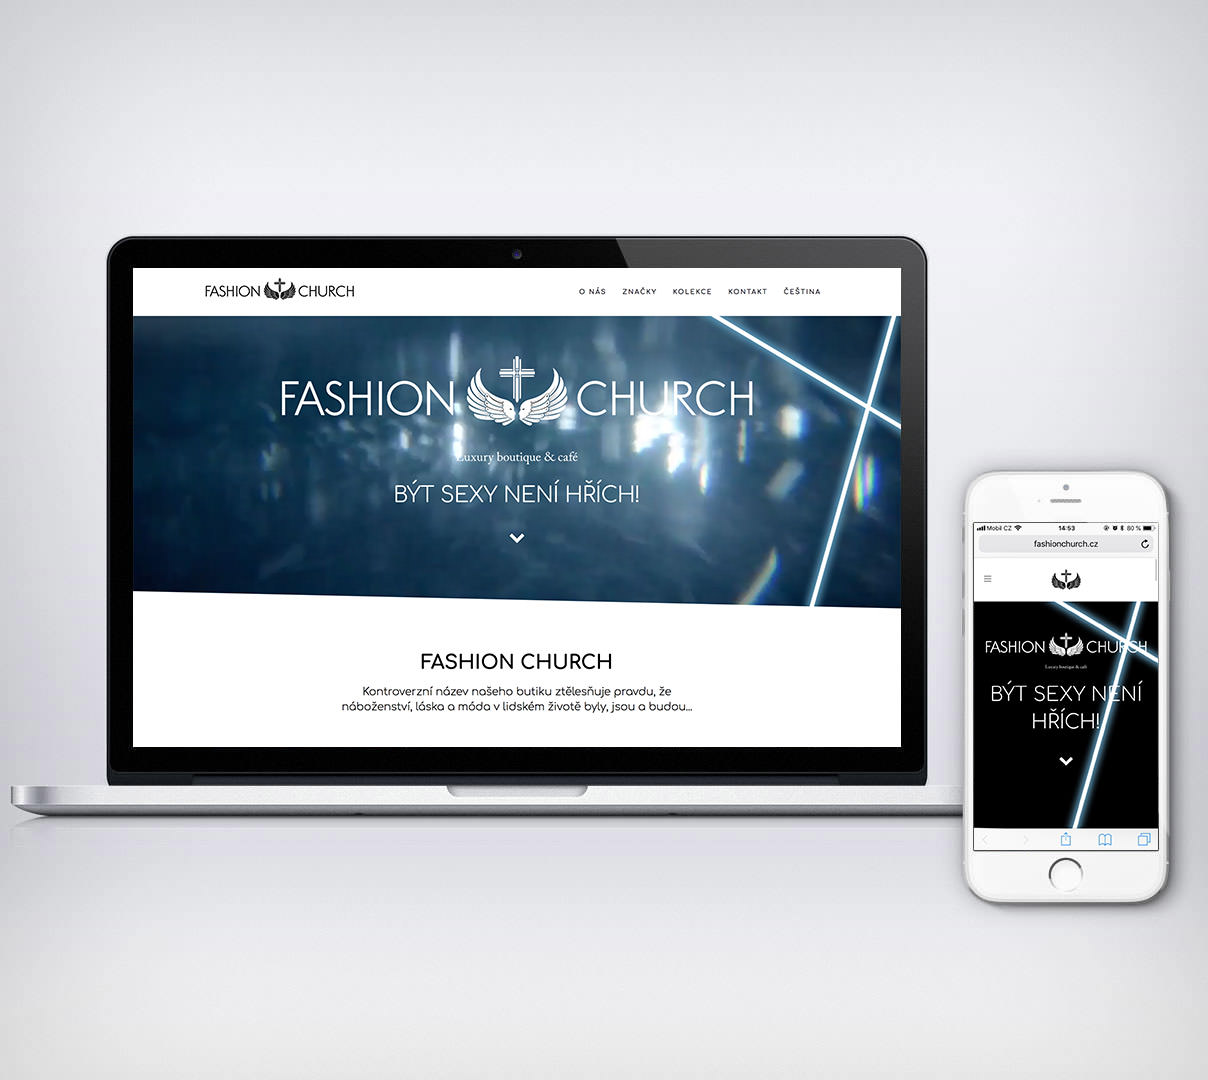 Fashion Church web design preview